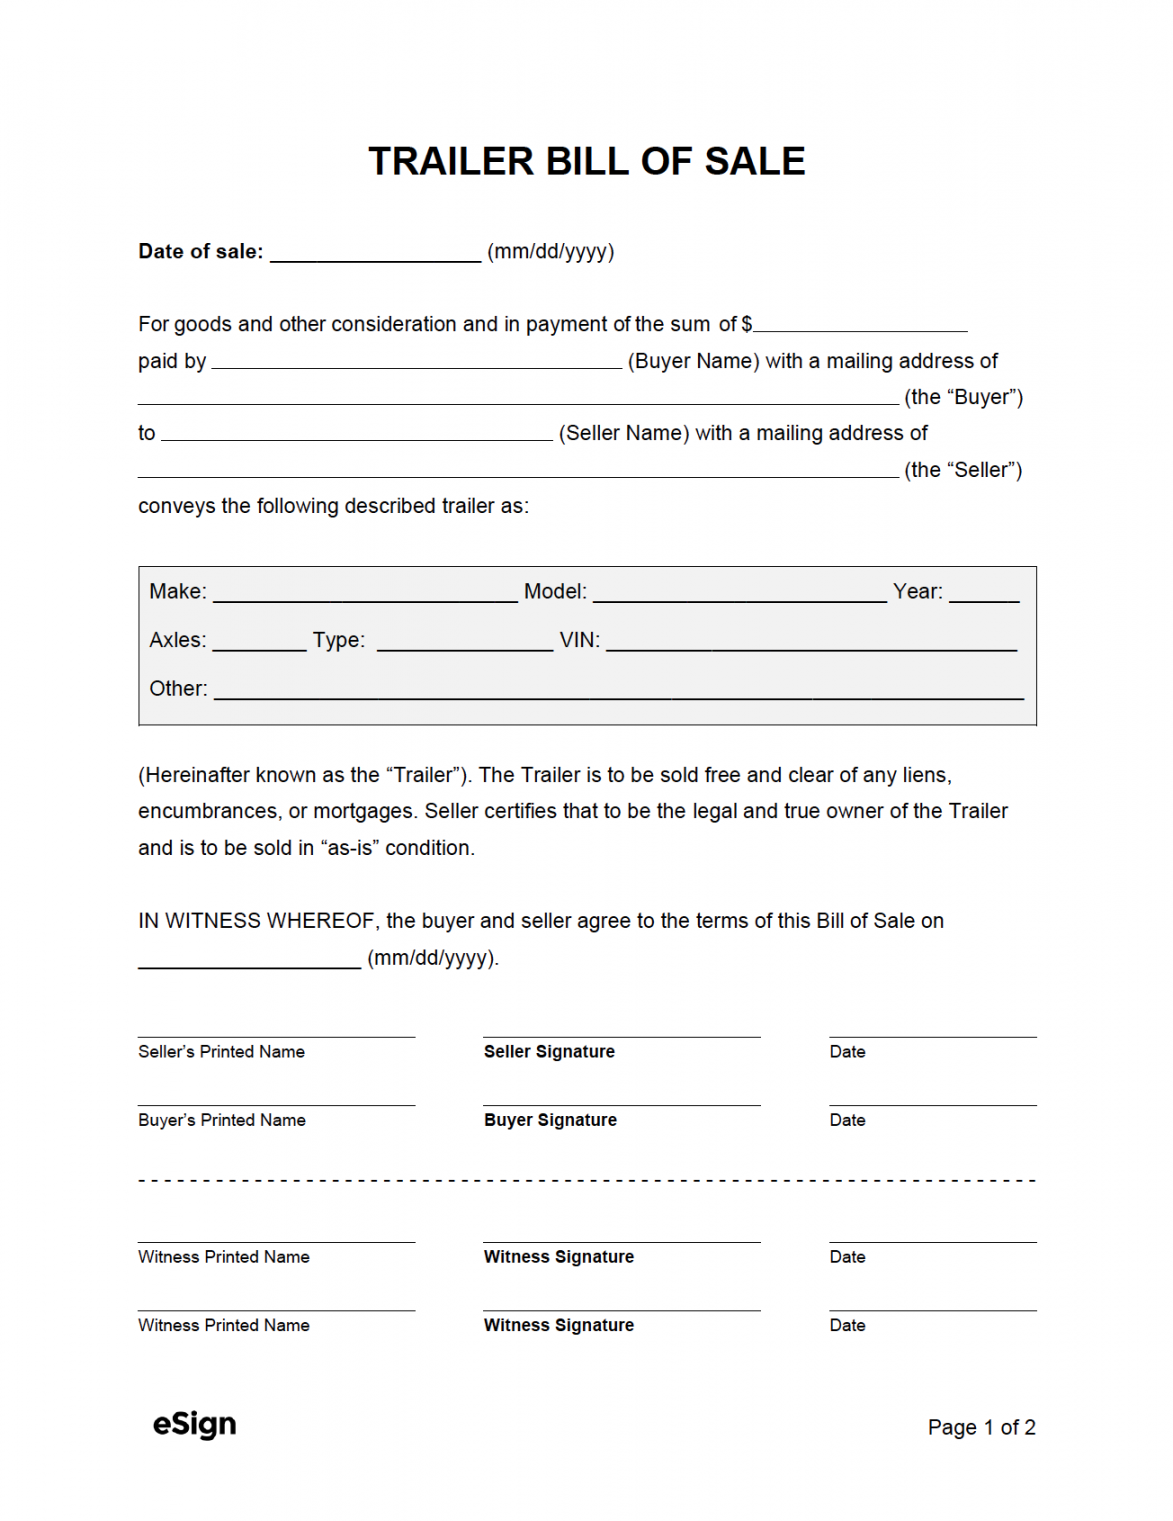 Free Trailer Bill of Sale Form  PDF  Word - FREE Printables - Free Printable Bill Of Sale For Trailer